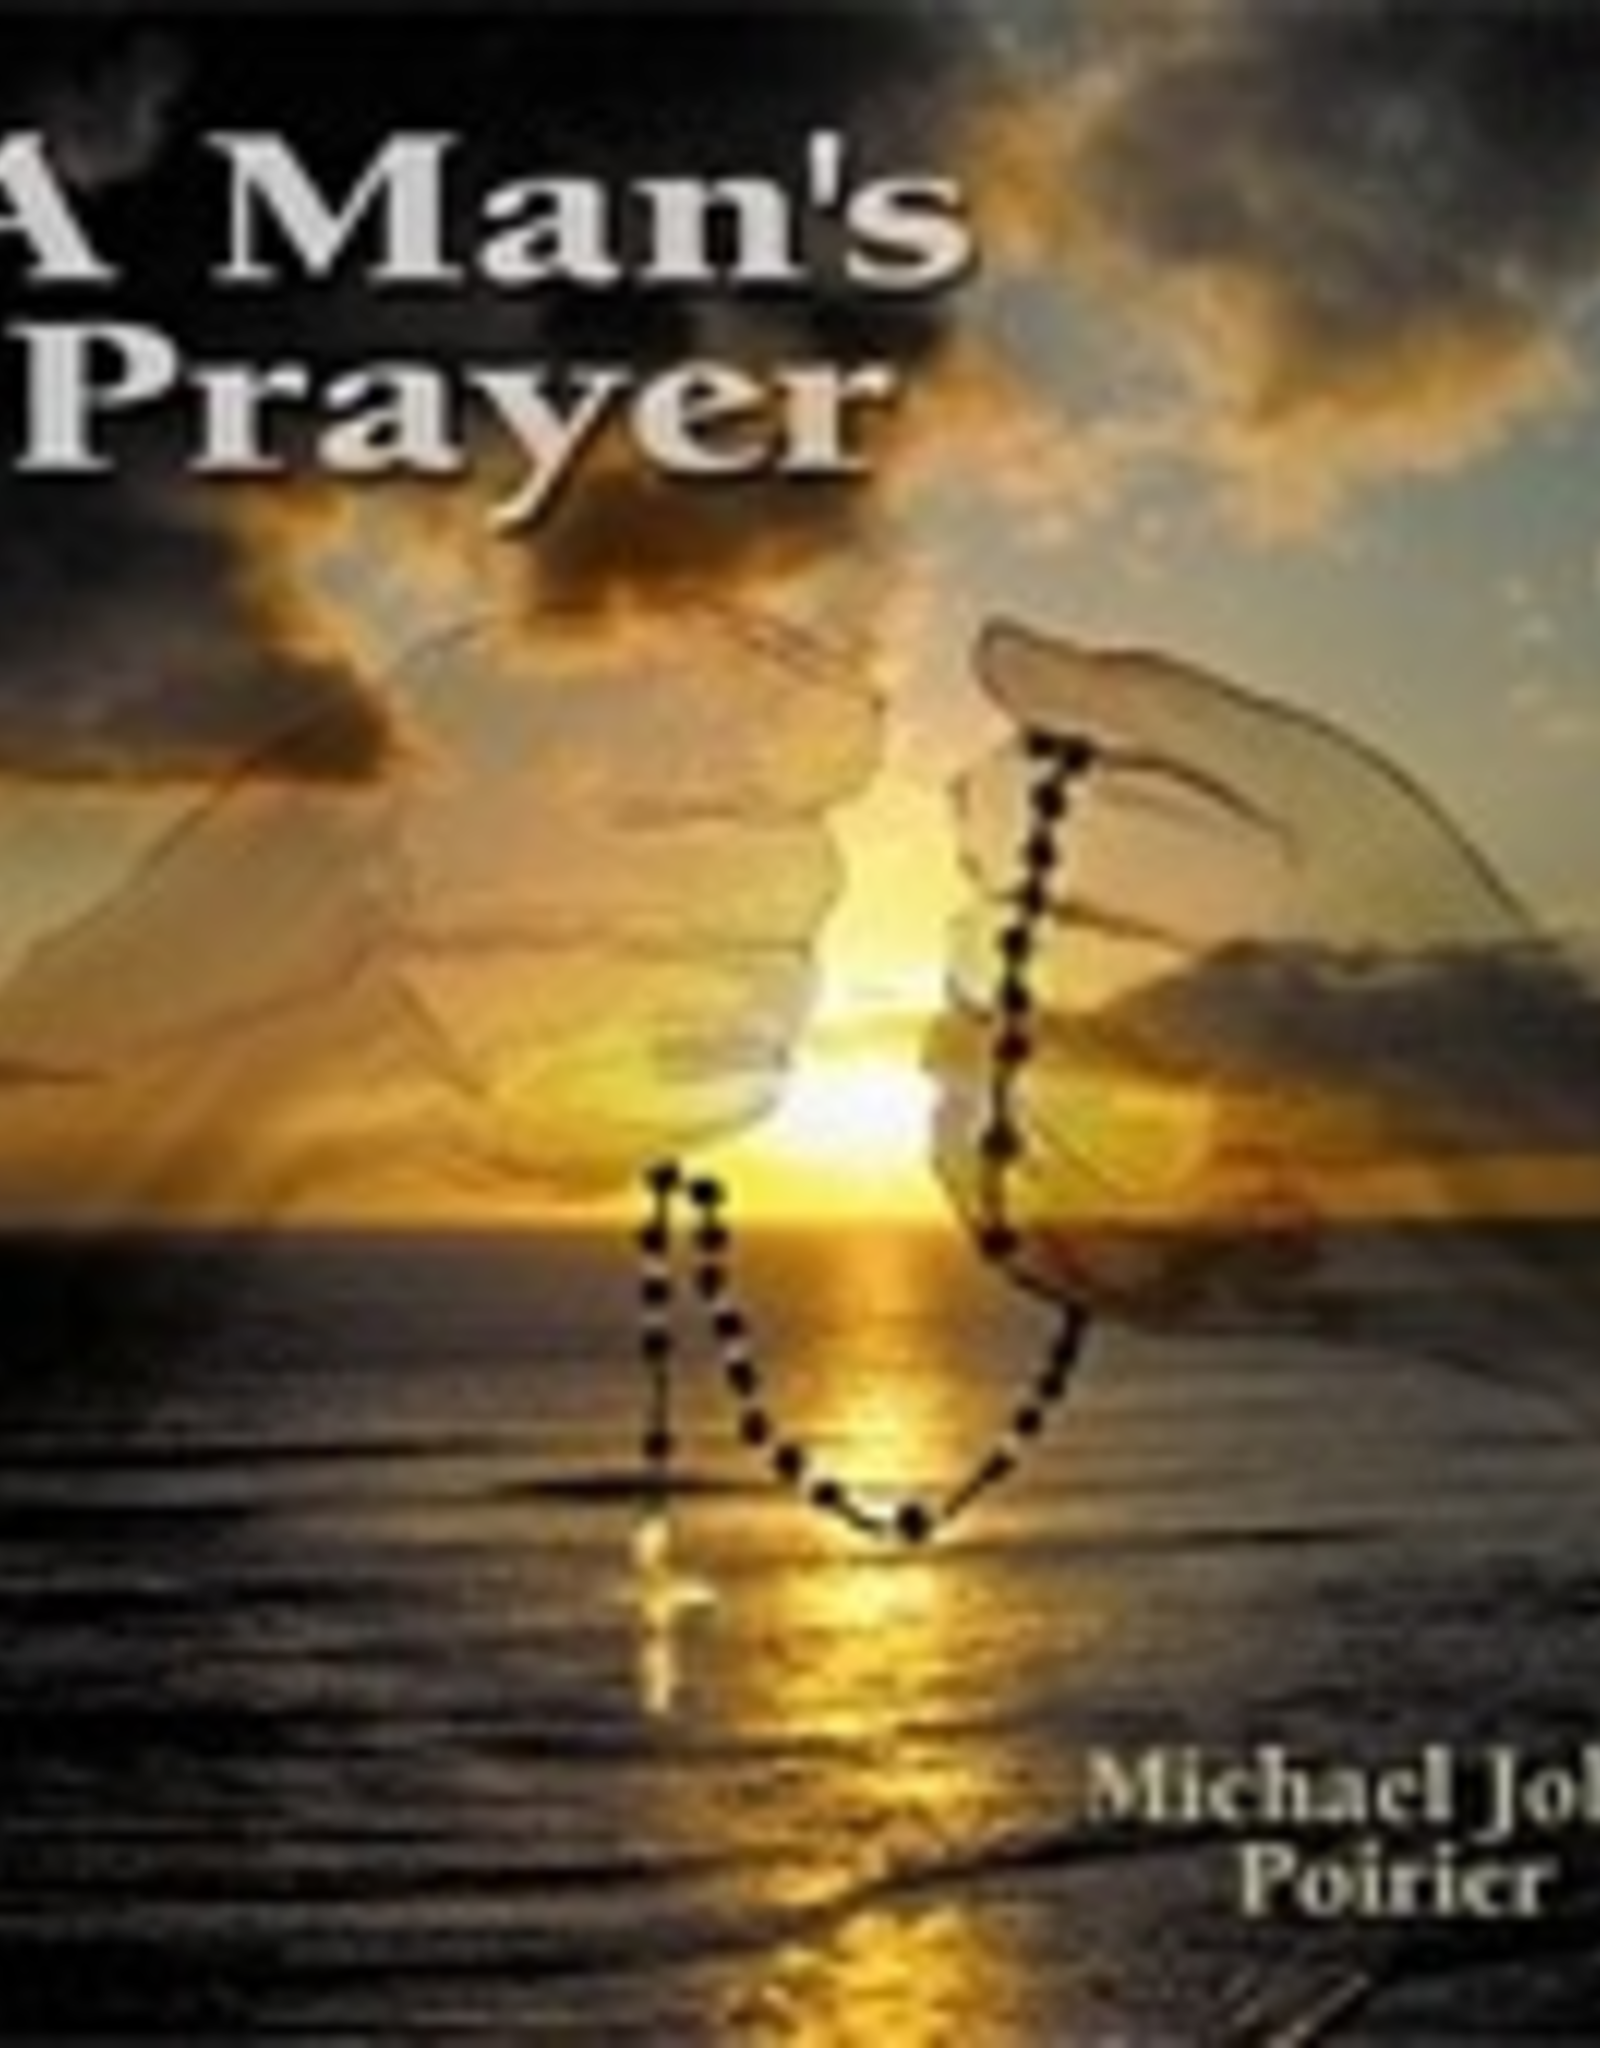 Michael John Poirier A Man's Prayer, by Michael John Poirier (CD)